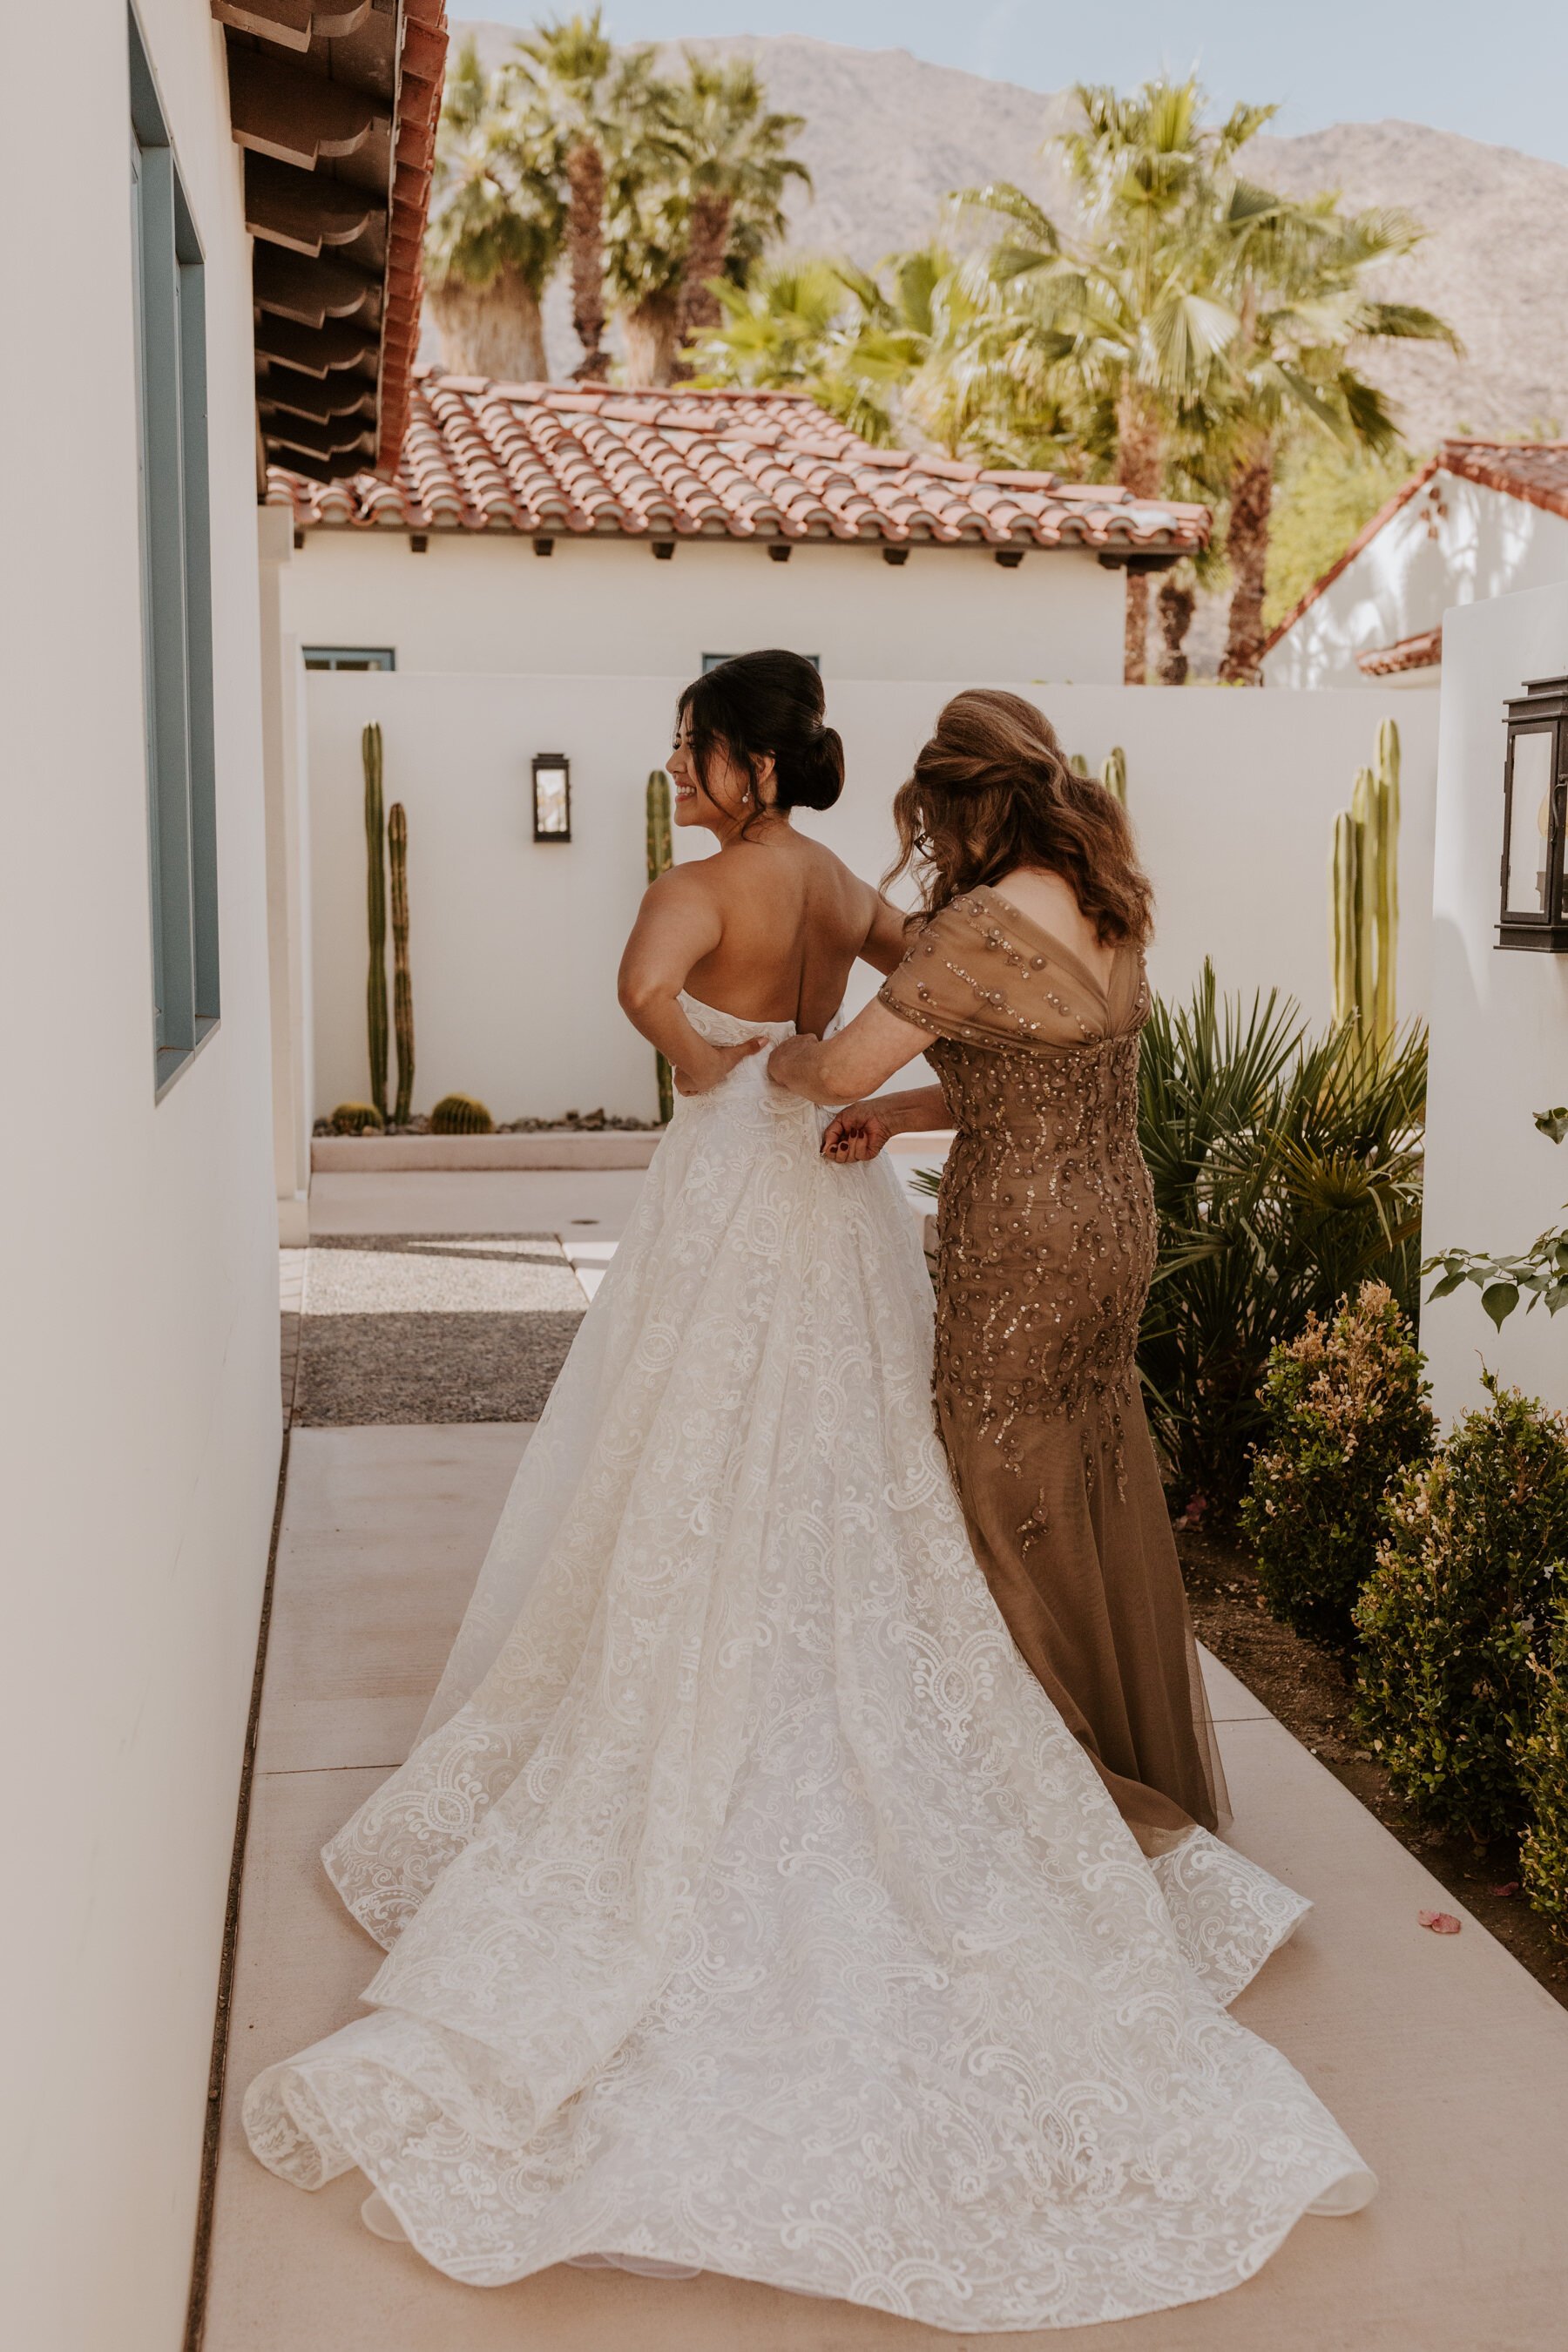 Mom zipping Bride’s Dress, Wedding Getting Ready Photos, La Serena Villas Palm Springs Wedding Photographer, Photo by Tida Svy